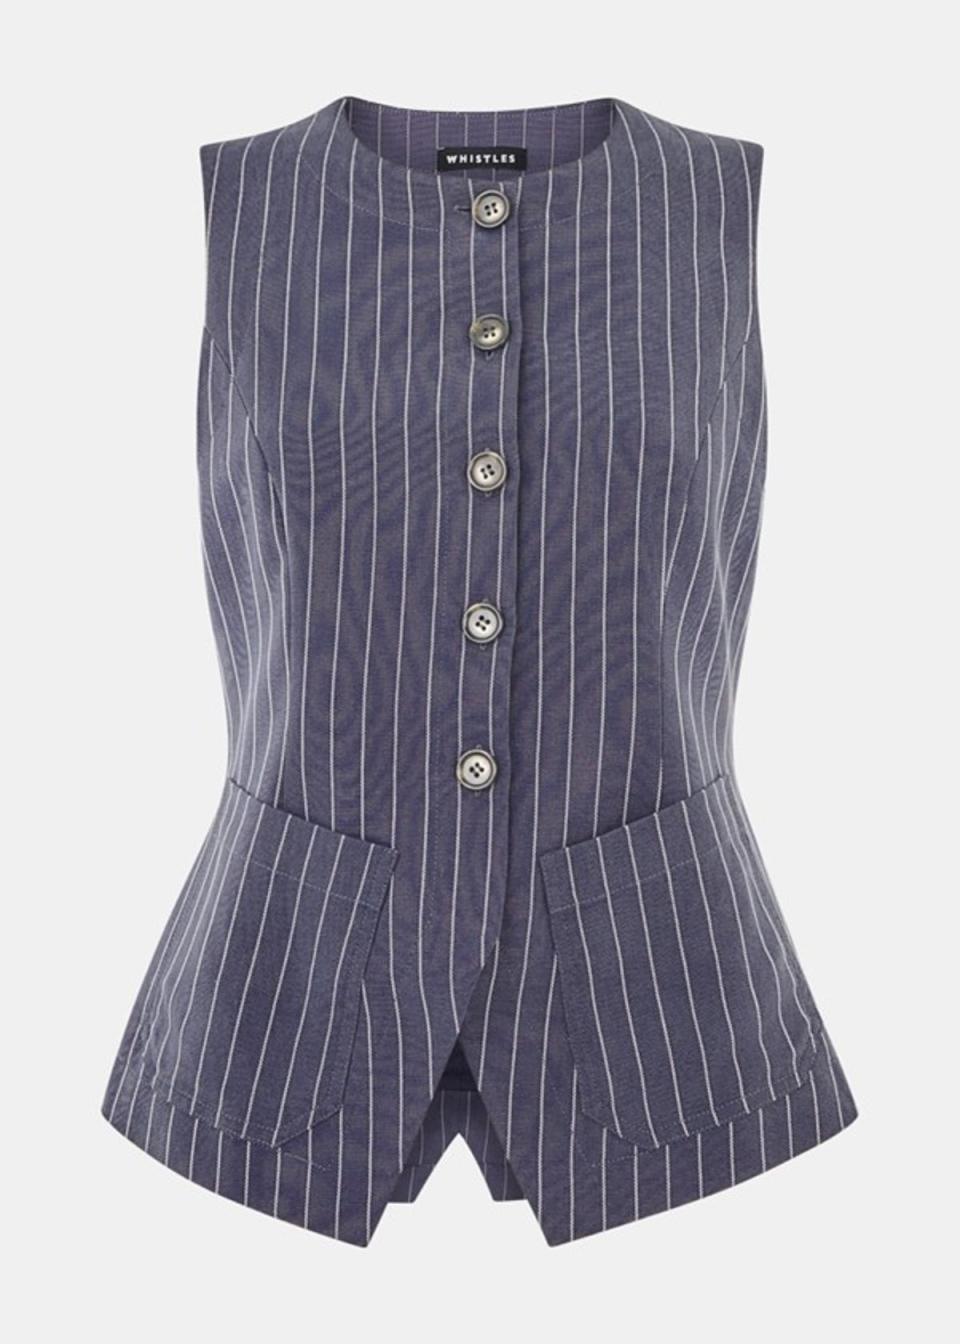 Lottie pinstripe waistcoat, £99, whistles.com  (Whistles)